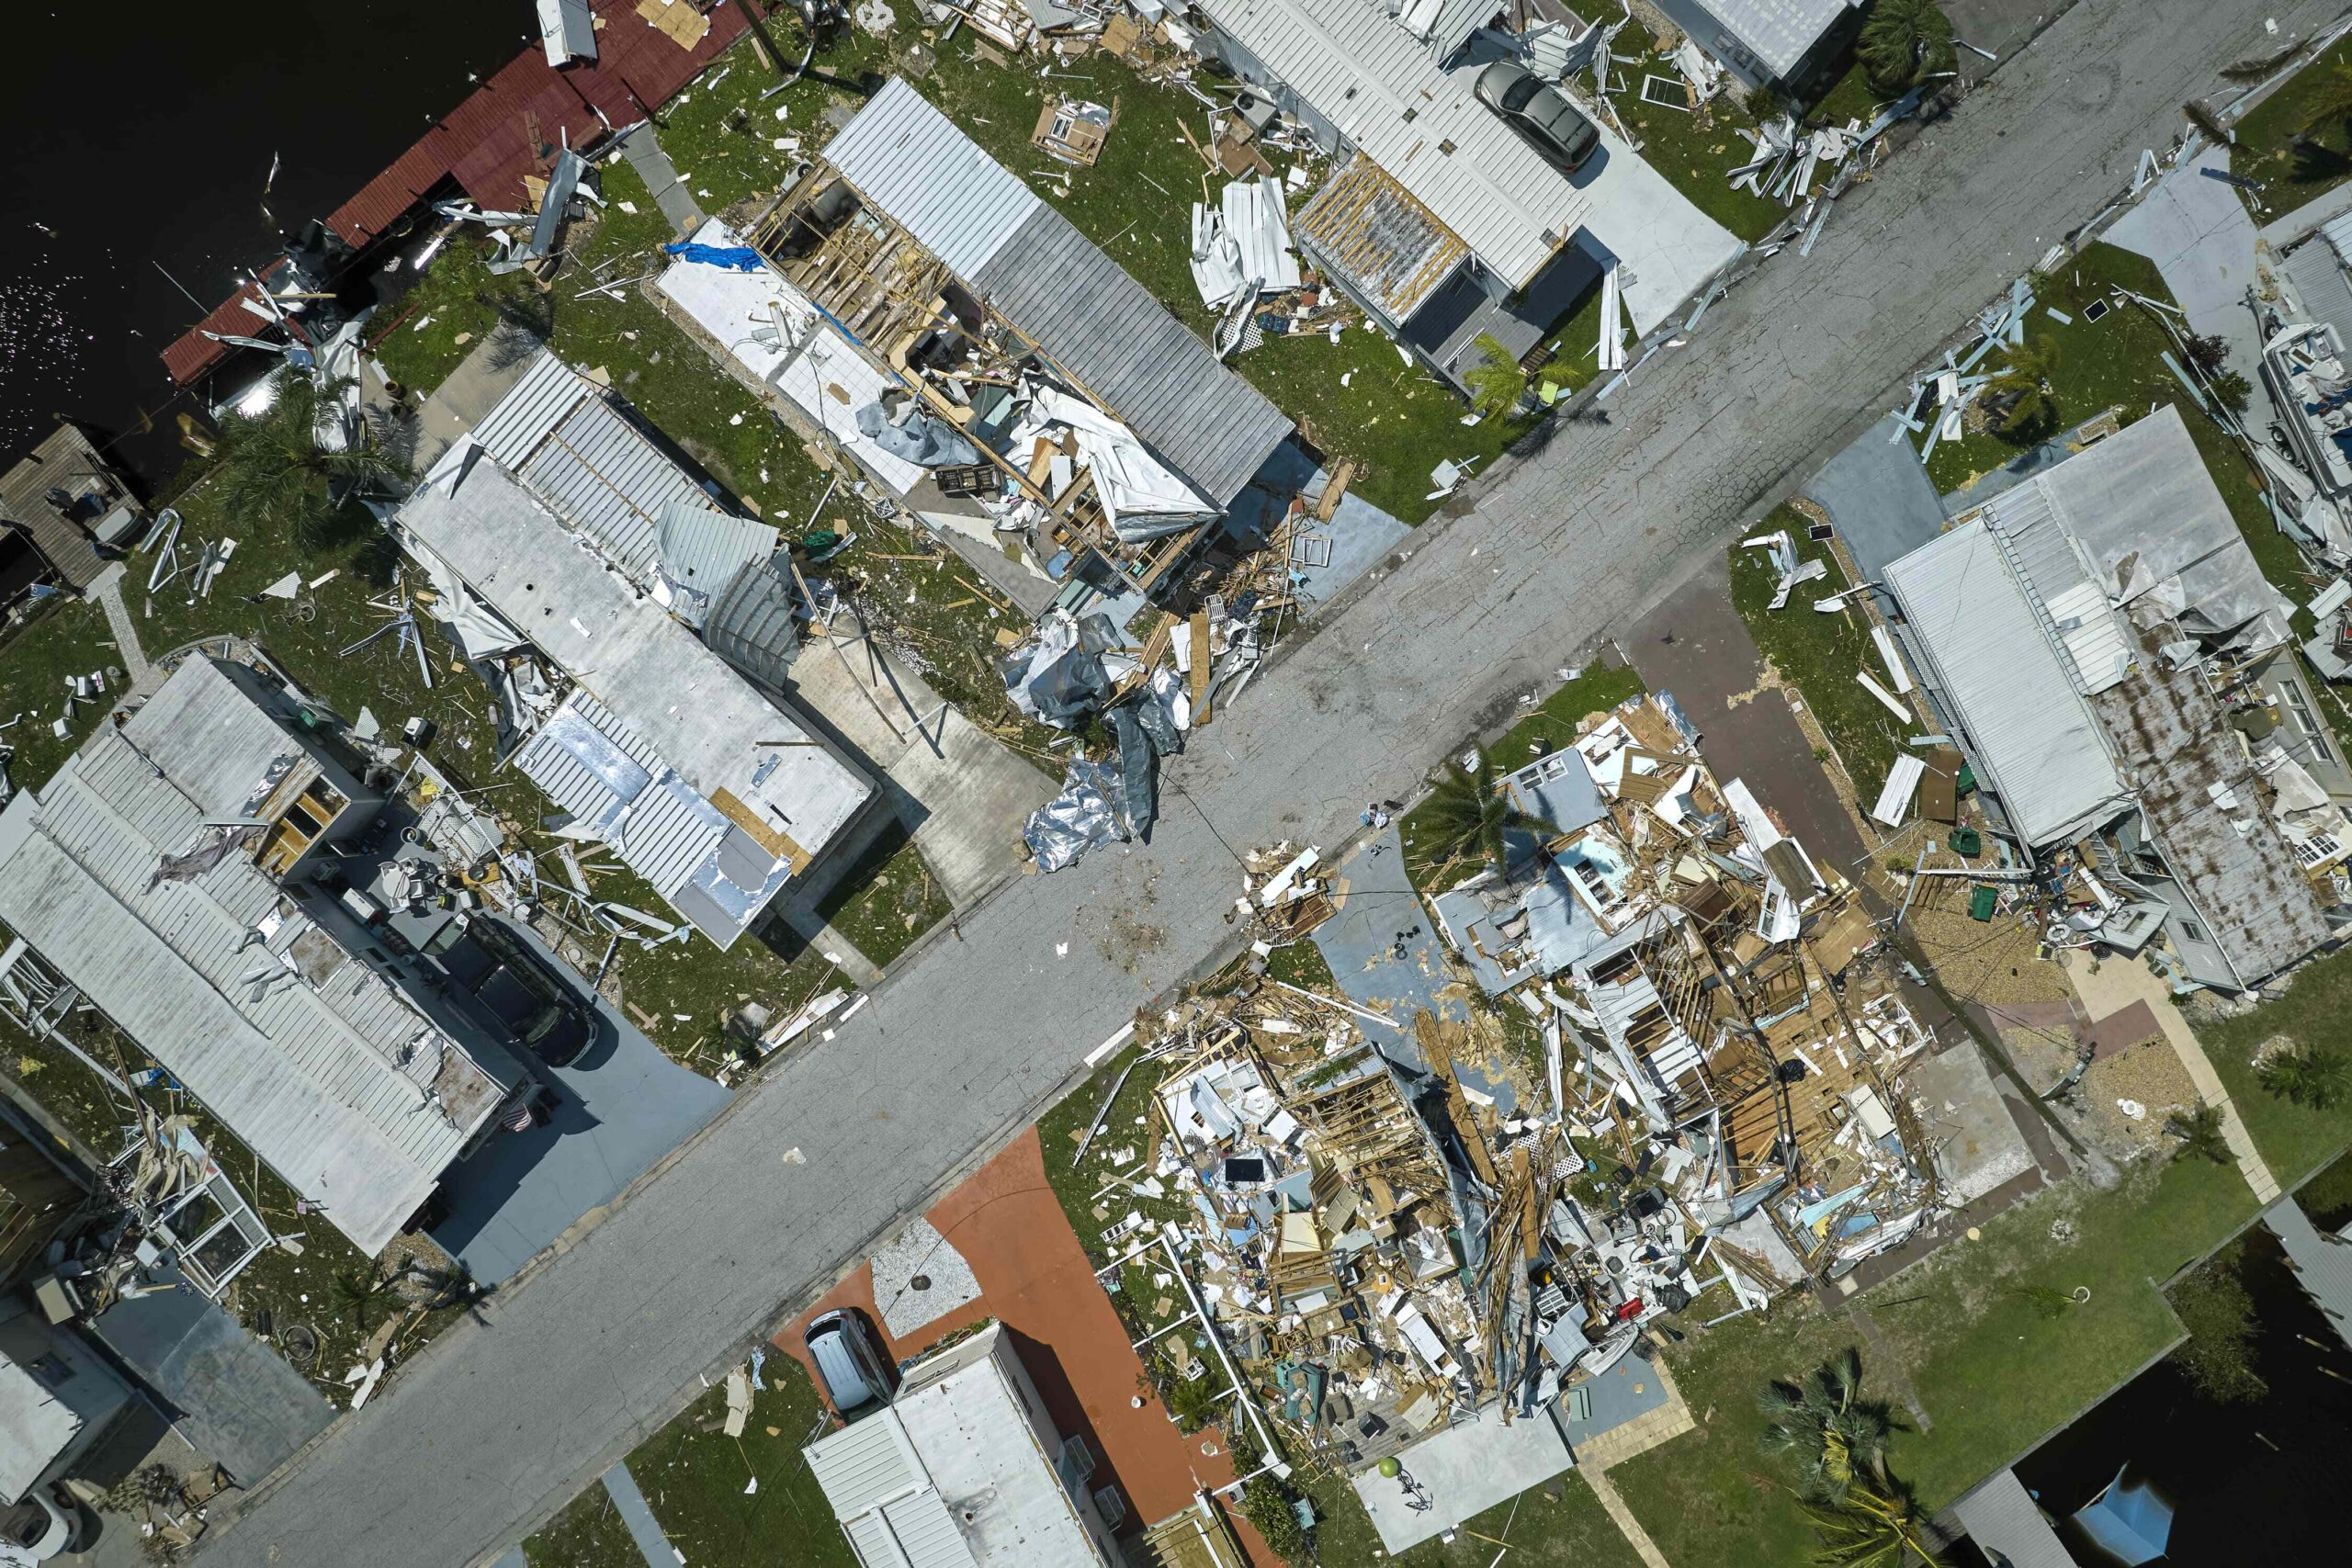 Damaged homes line a street in the wake of Hurricane Ian.